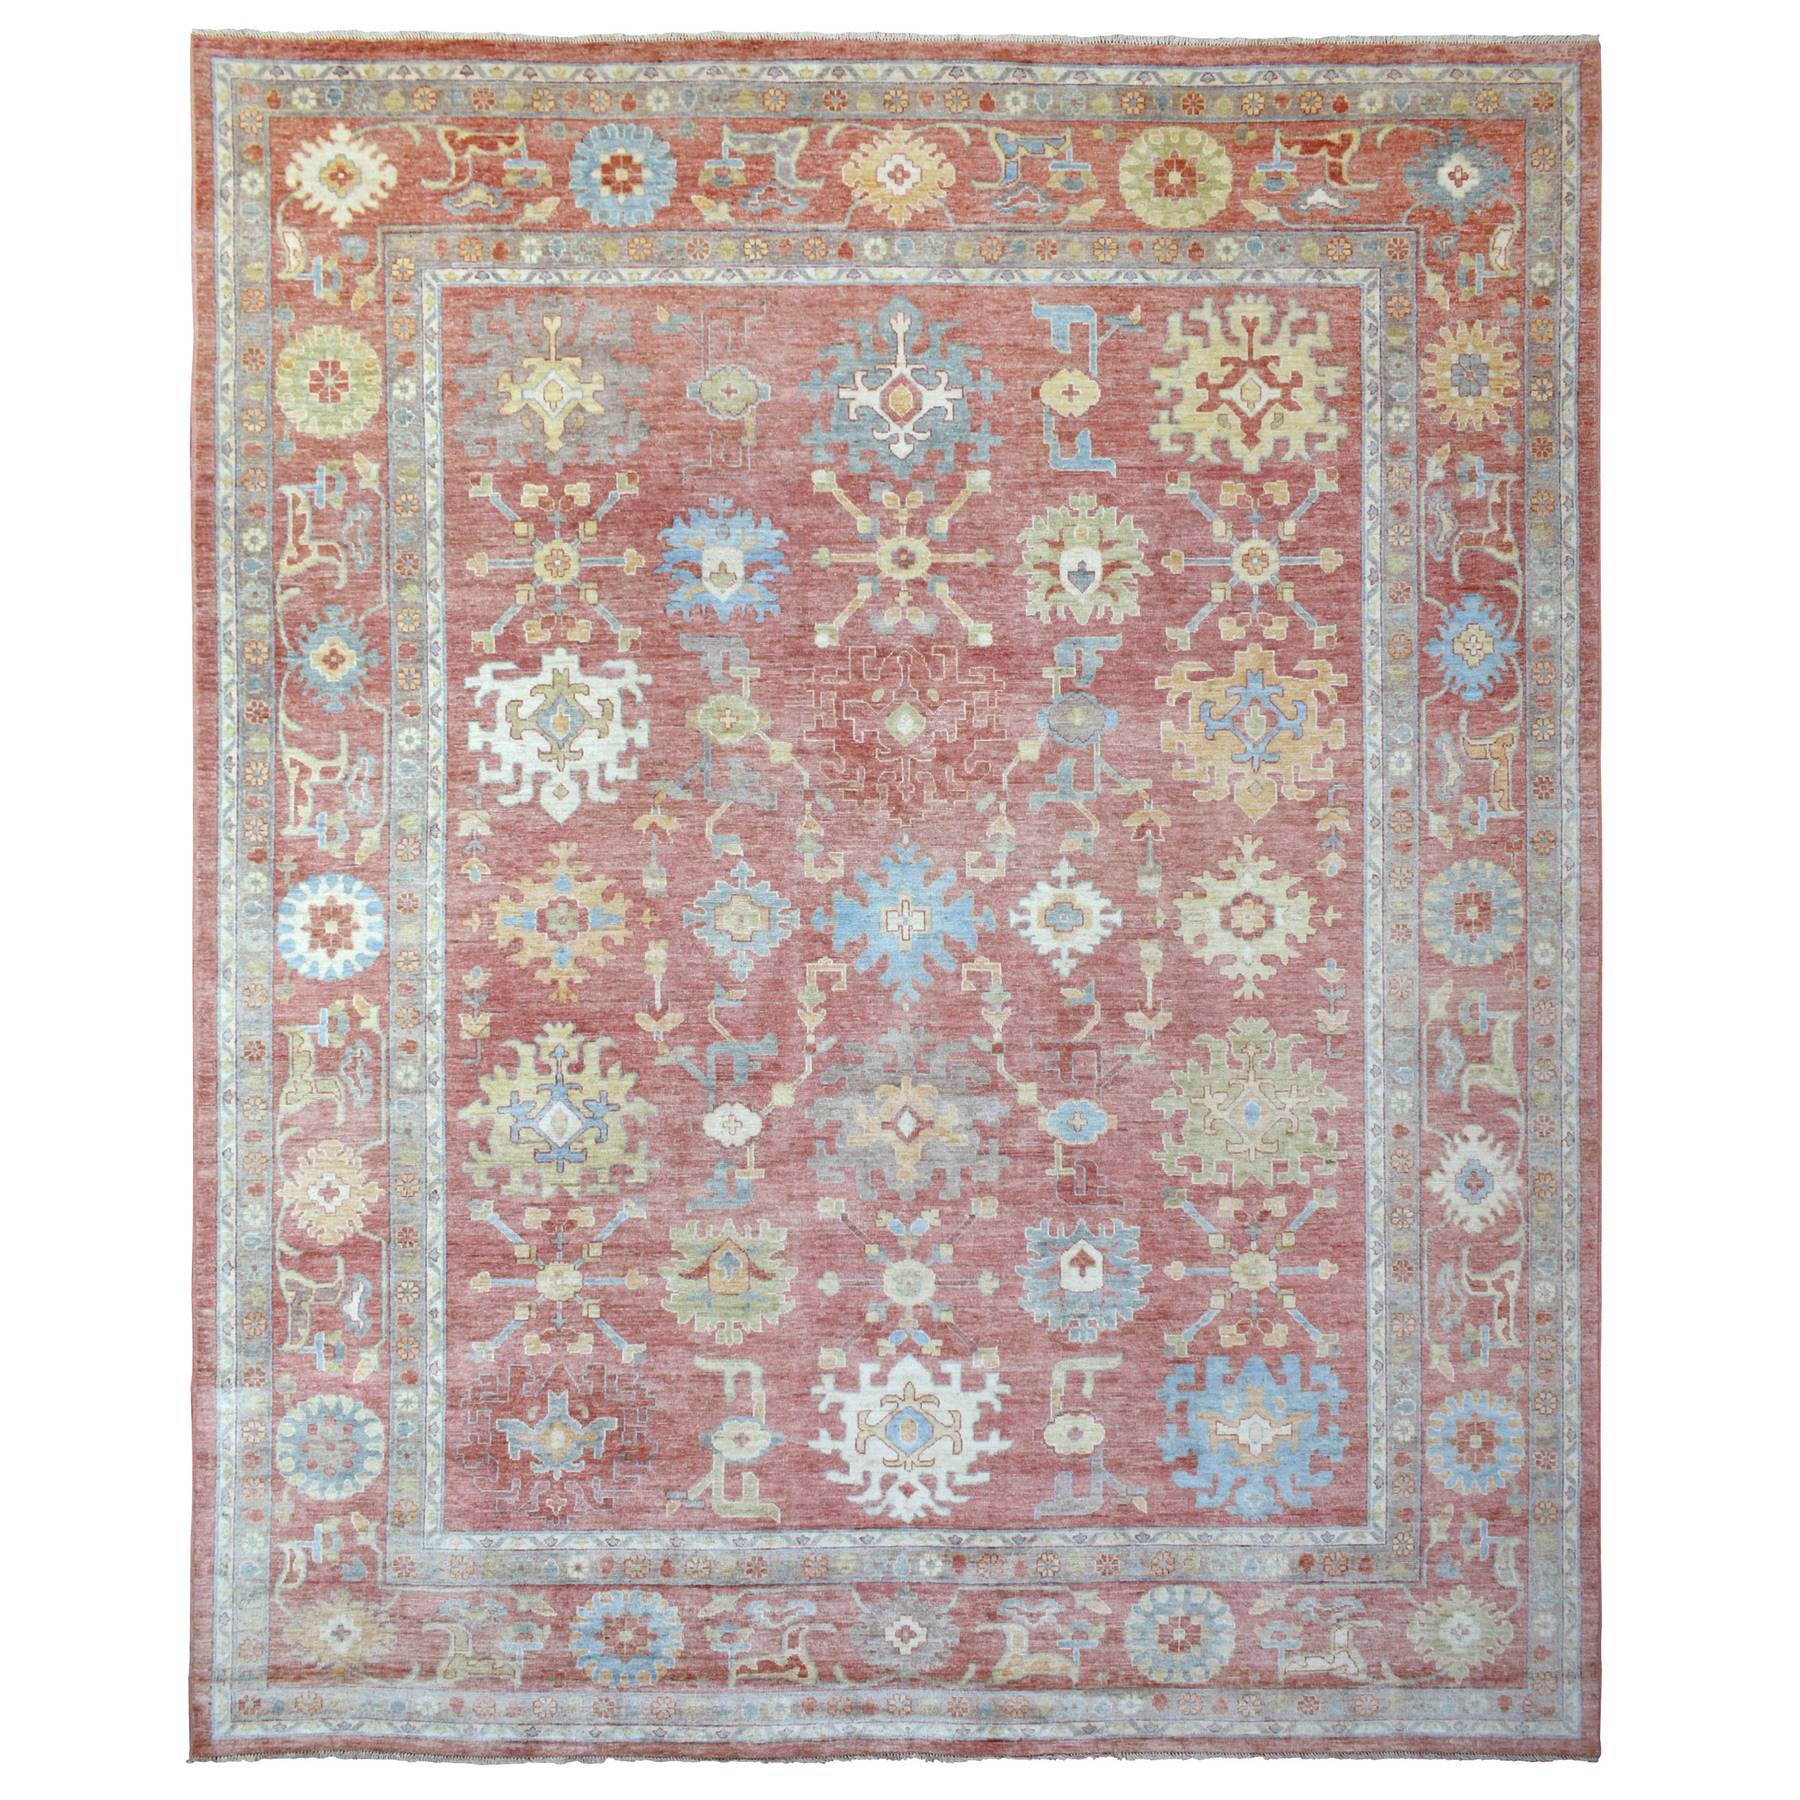 Kashmiri hand knotted silk sisal carpet jute rugs for home furniture